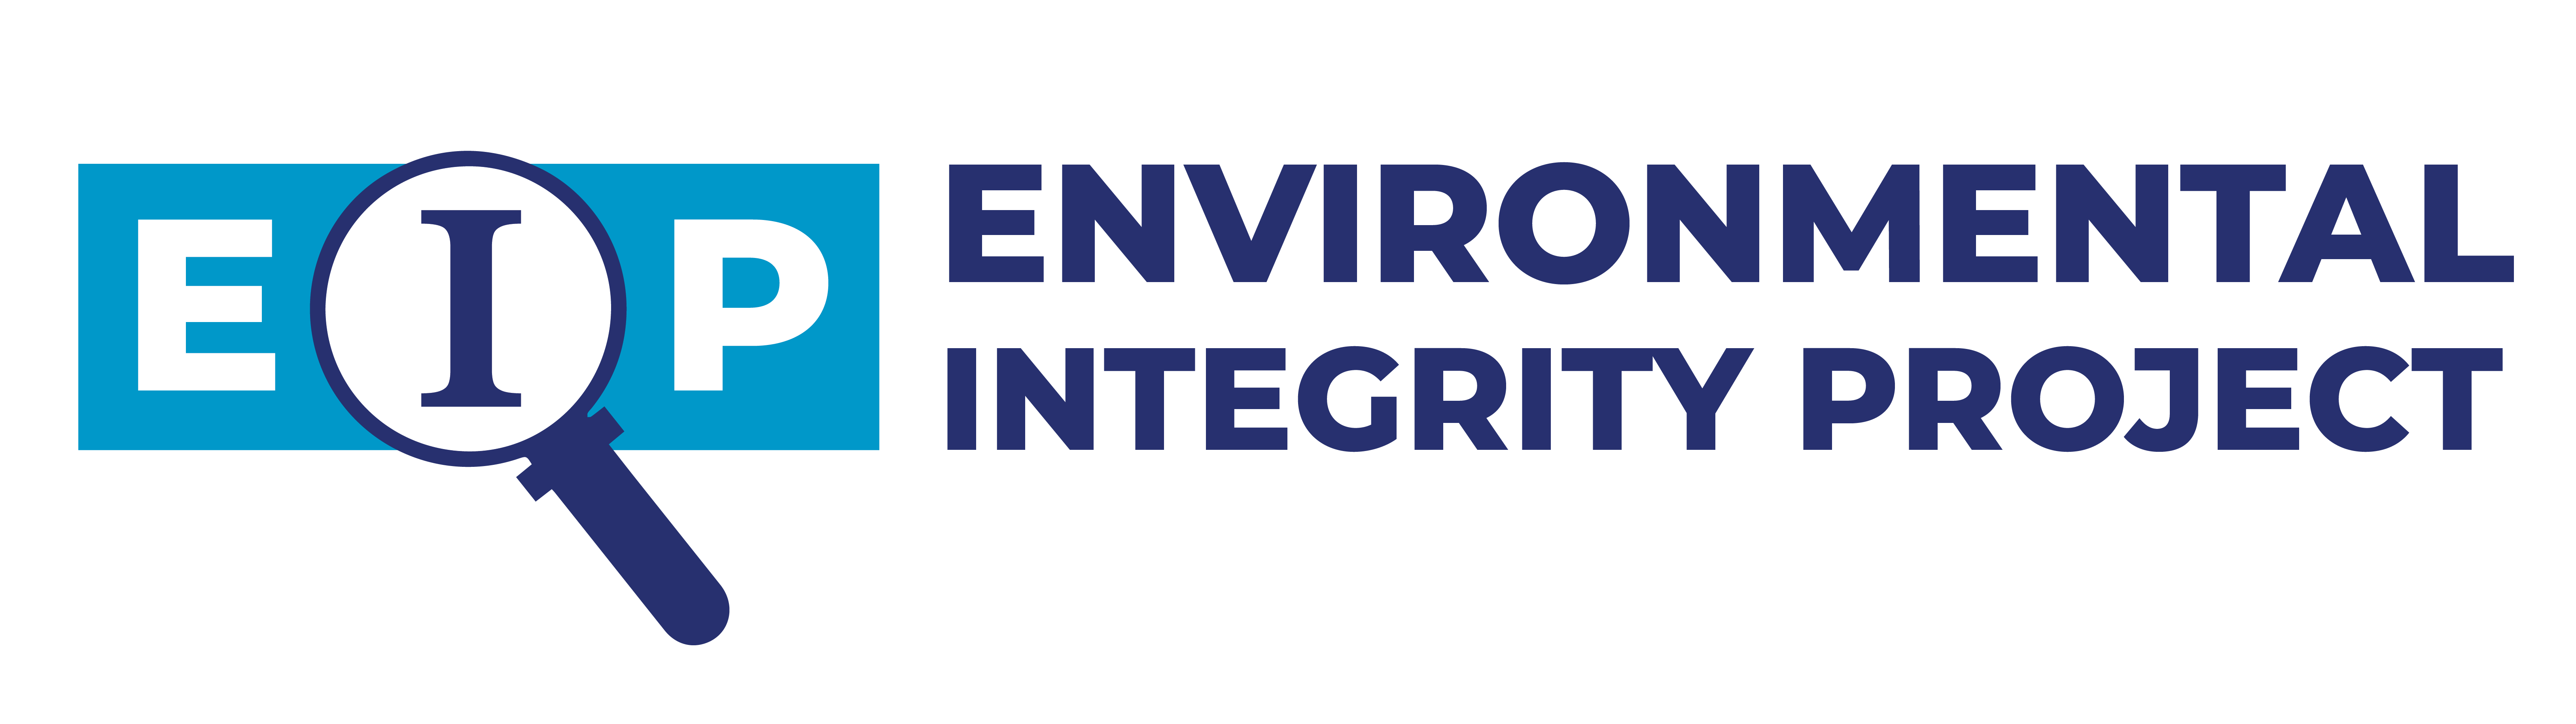 Environmental Integrity Project